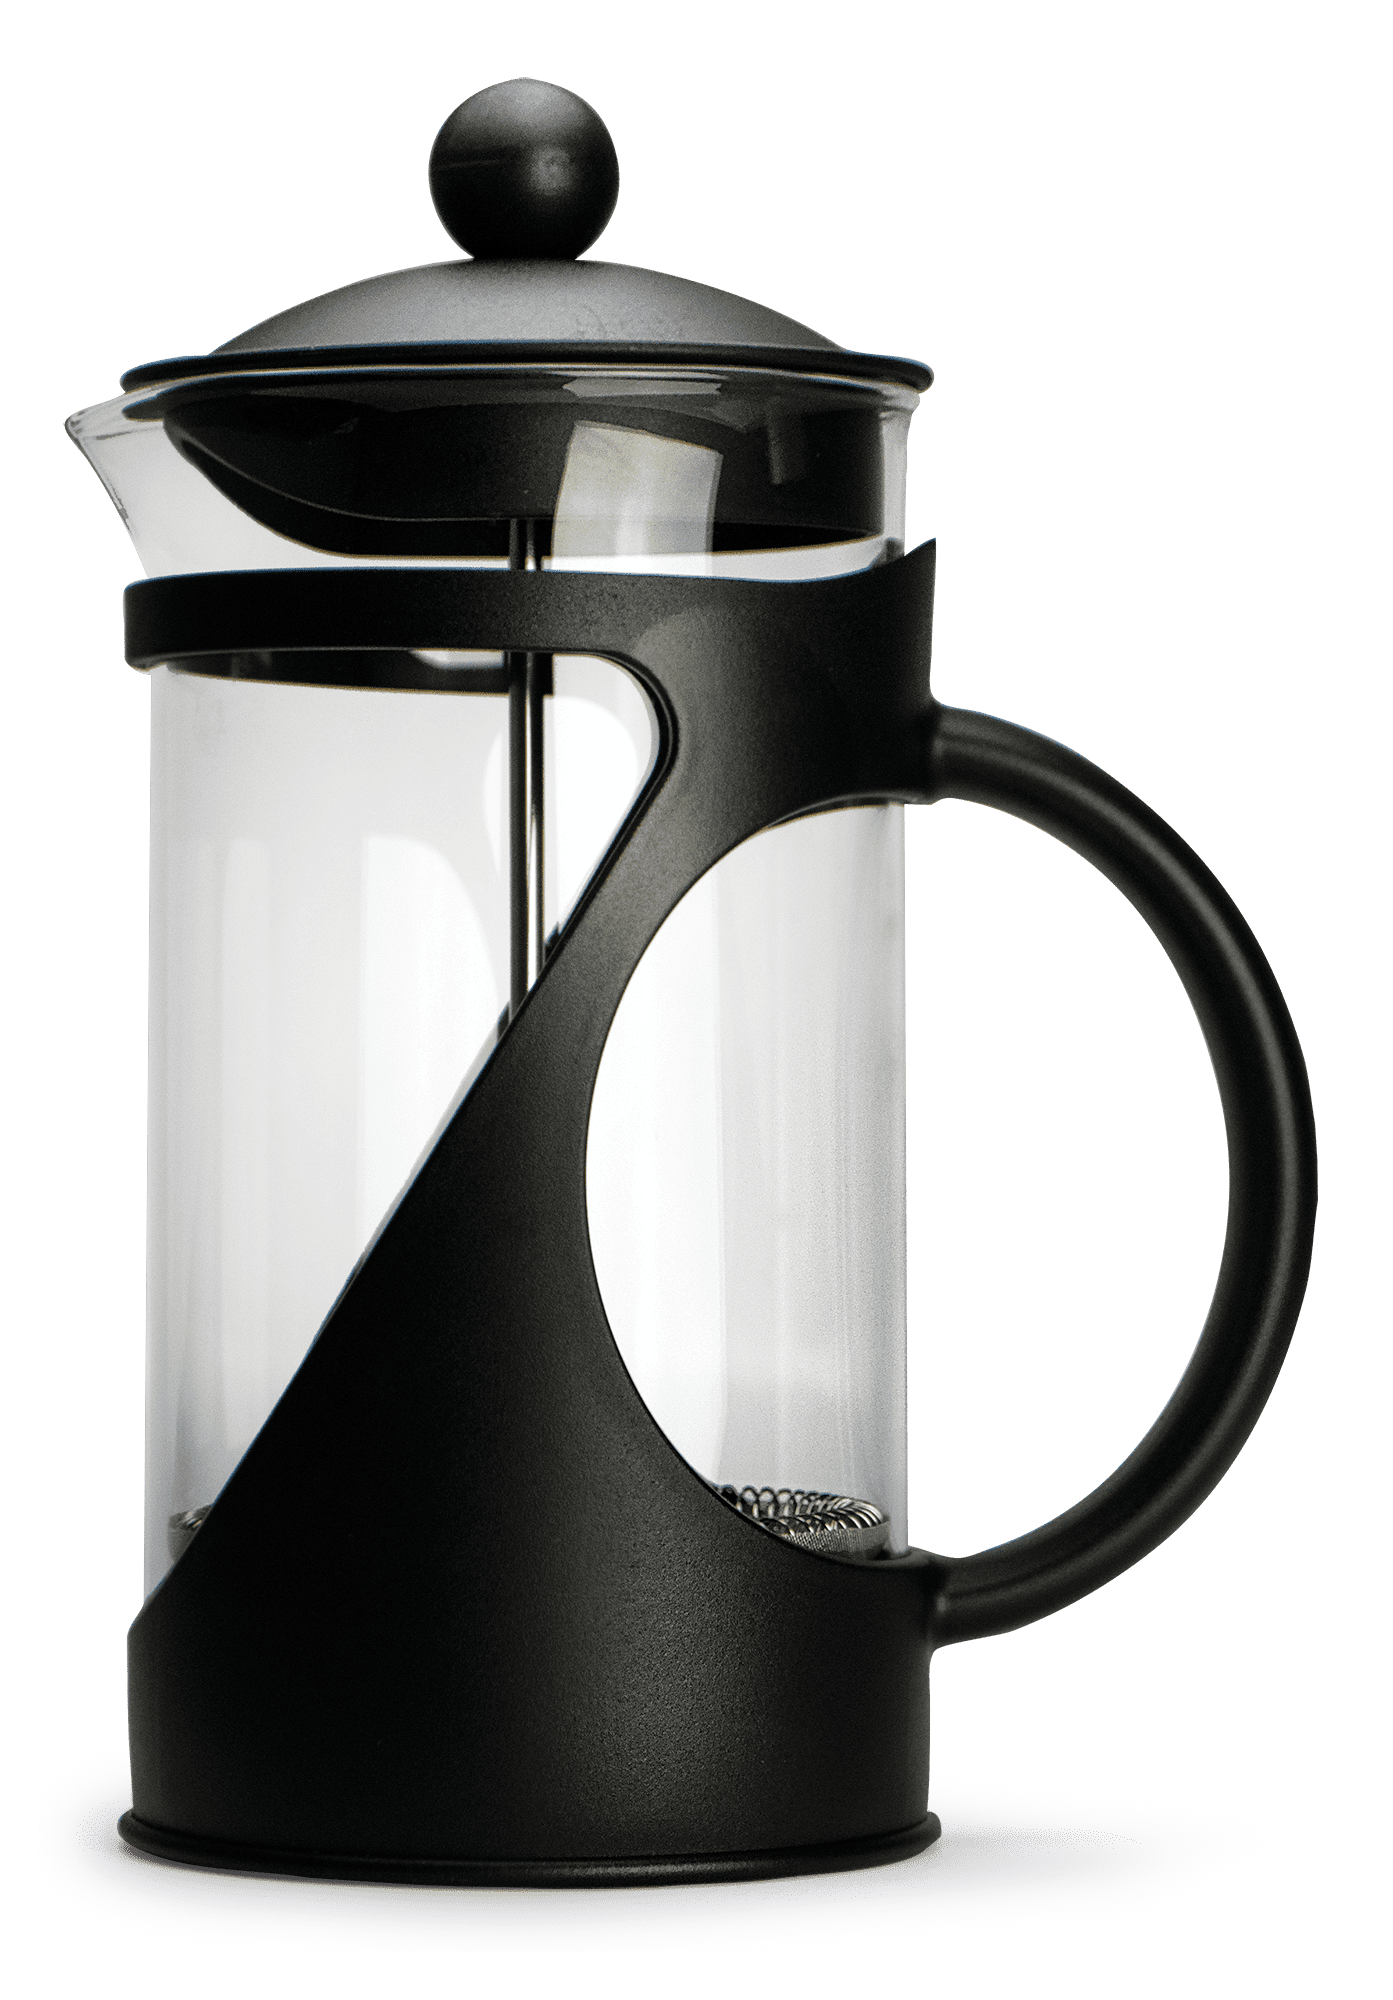 French Press Recipe — Clarity Coffee